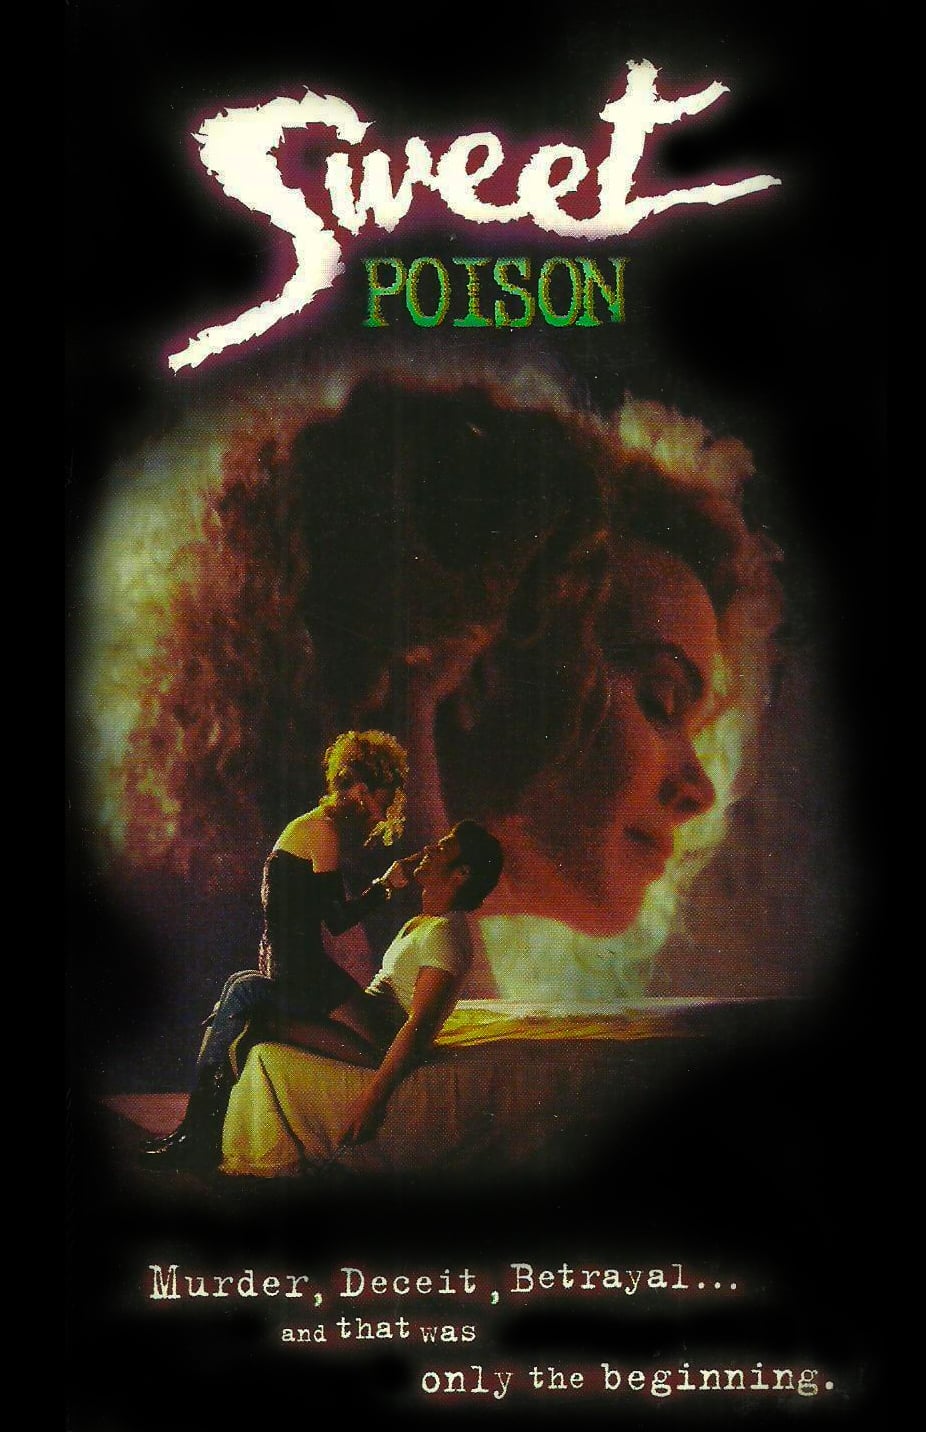 Sweet Poison (1991)